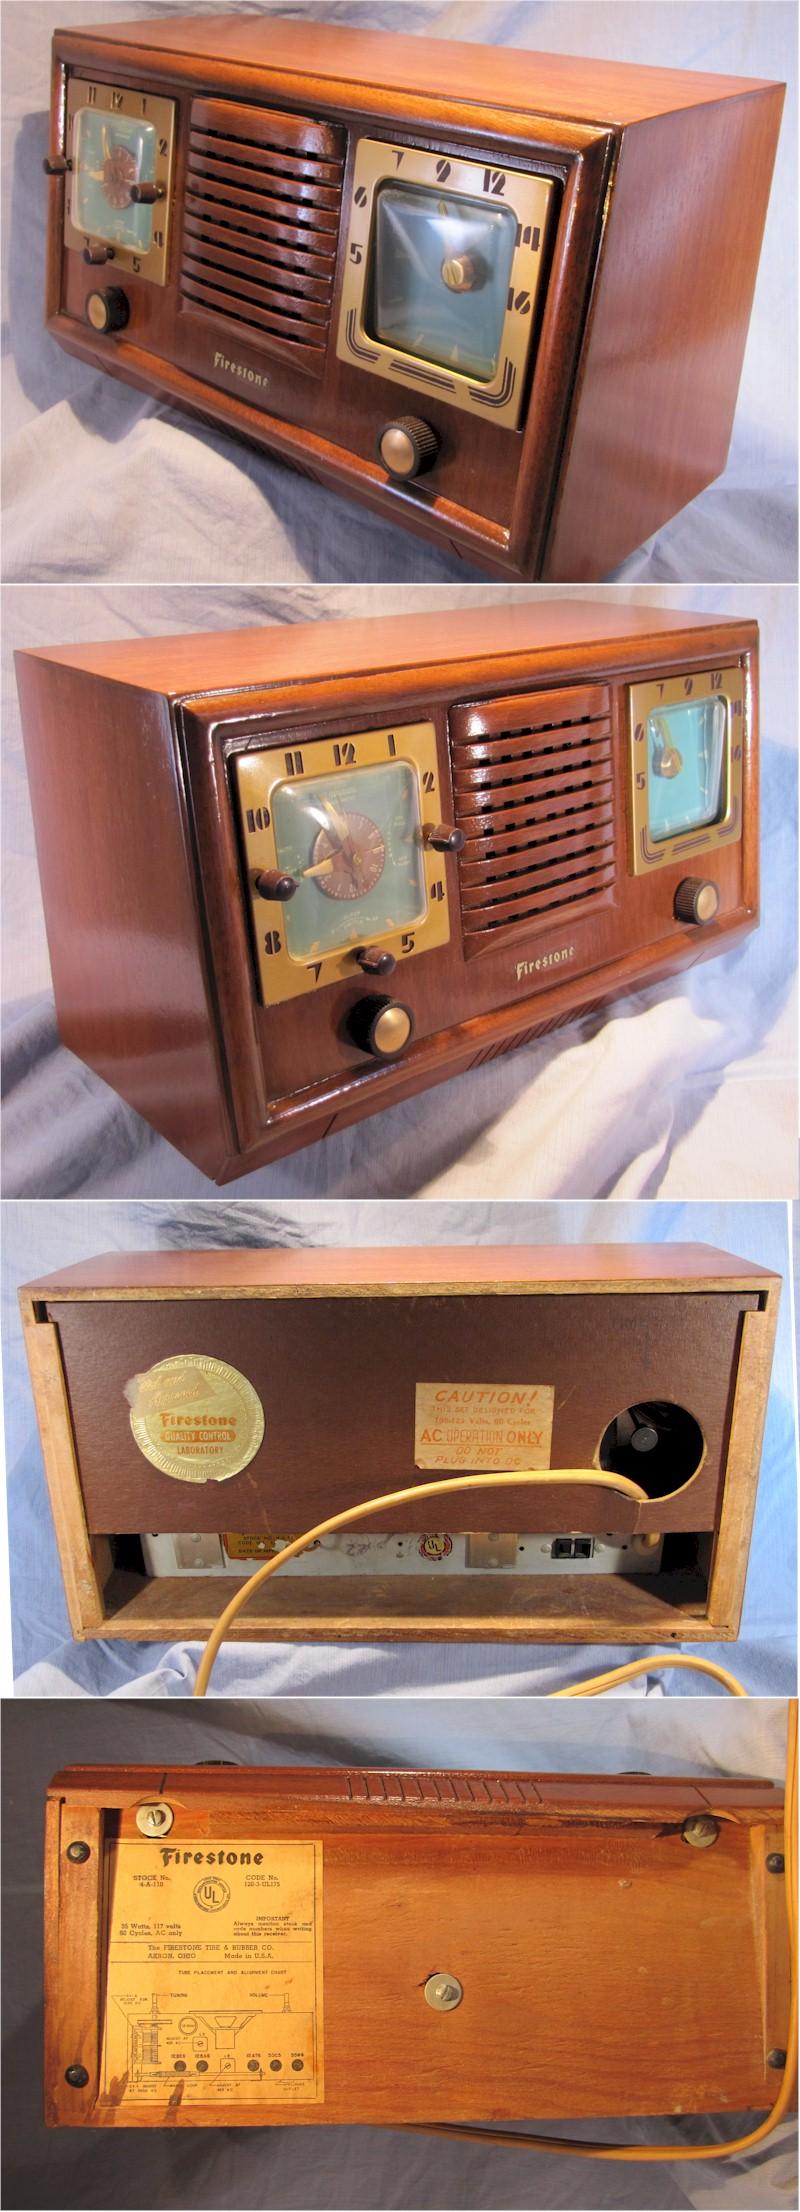 Firestone 5170 Clock Radio